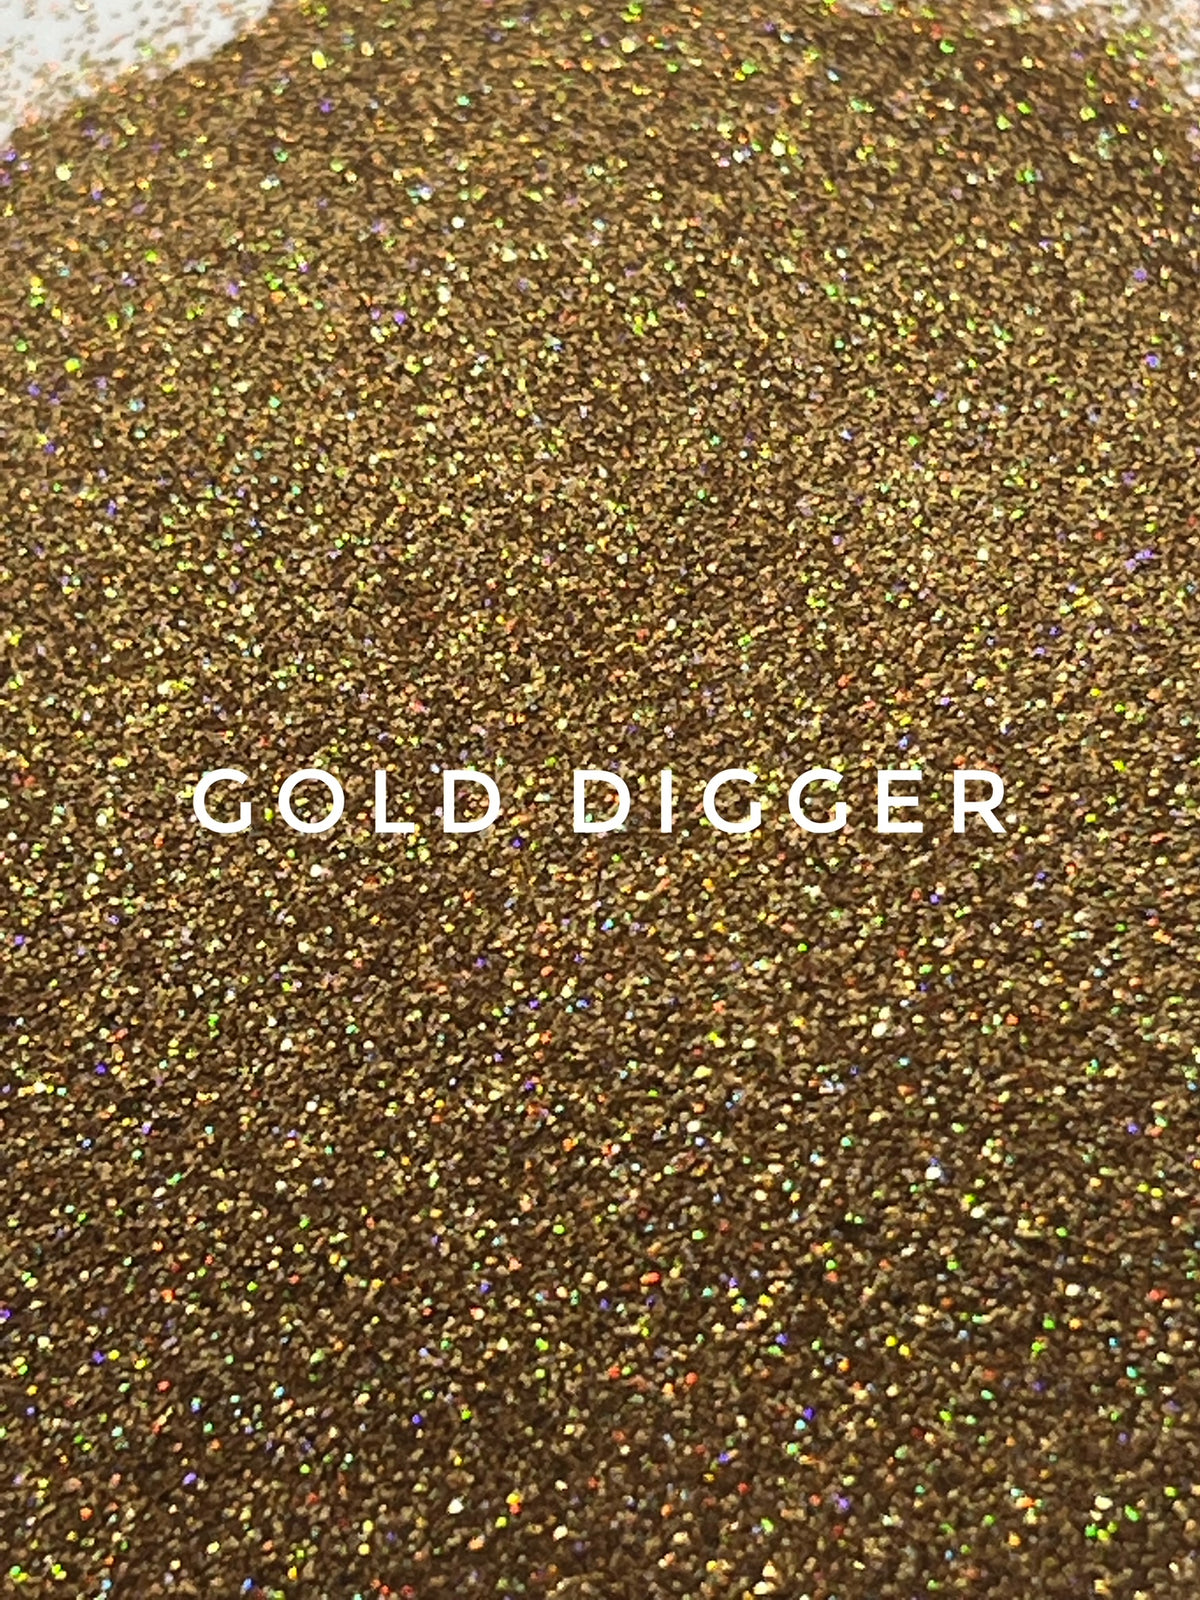 Gold Digger - 1/128